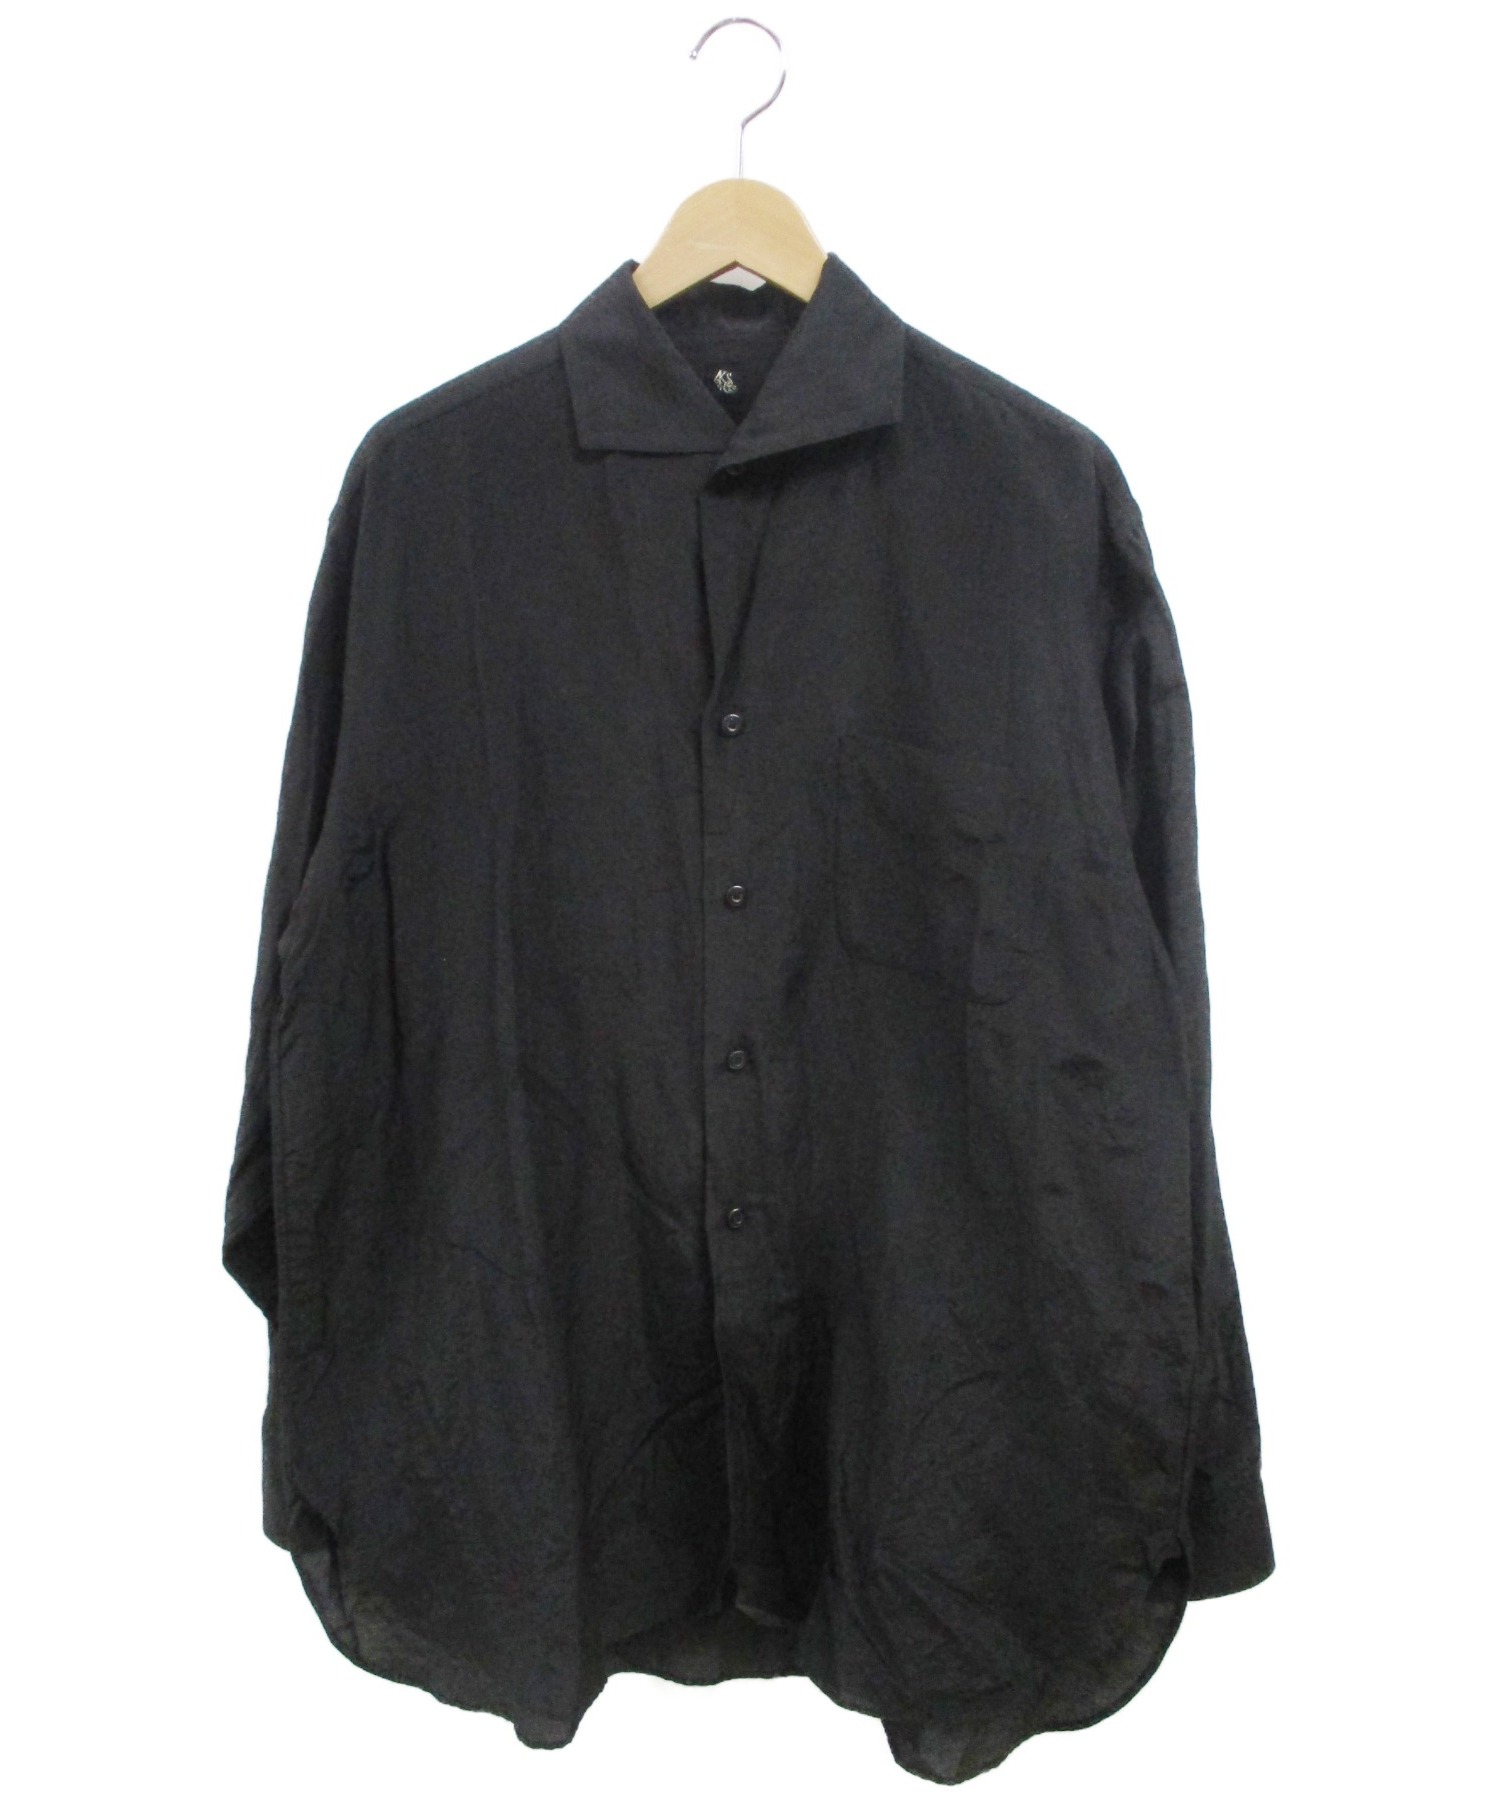 KAPTAIN SUNSHINE (キャプテン サンシャイン) リビエラ ロングスリーブシャツ ブラック サイズ:38